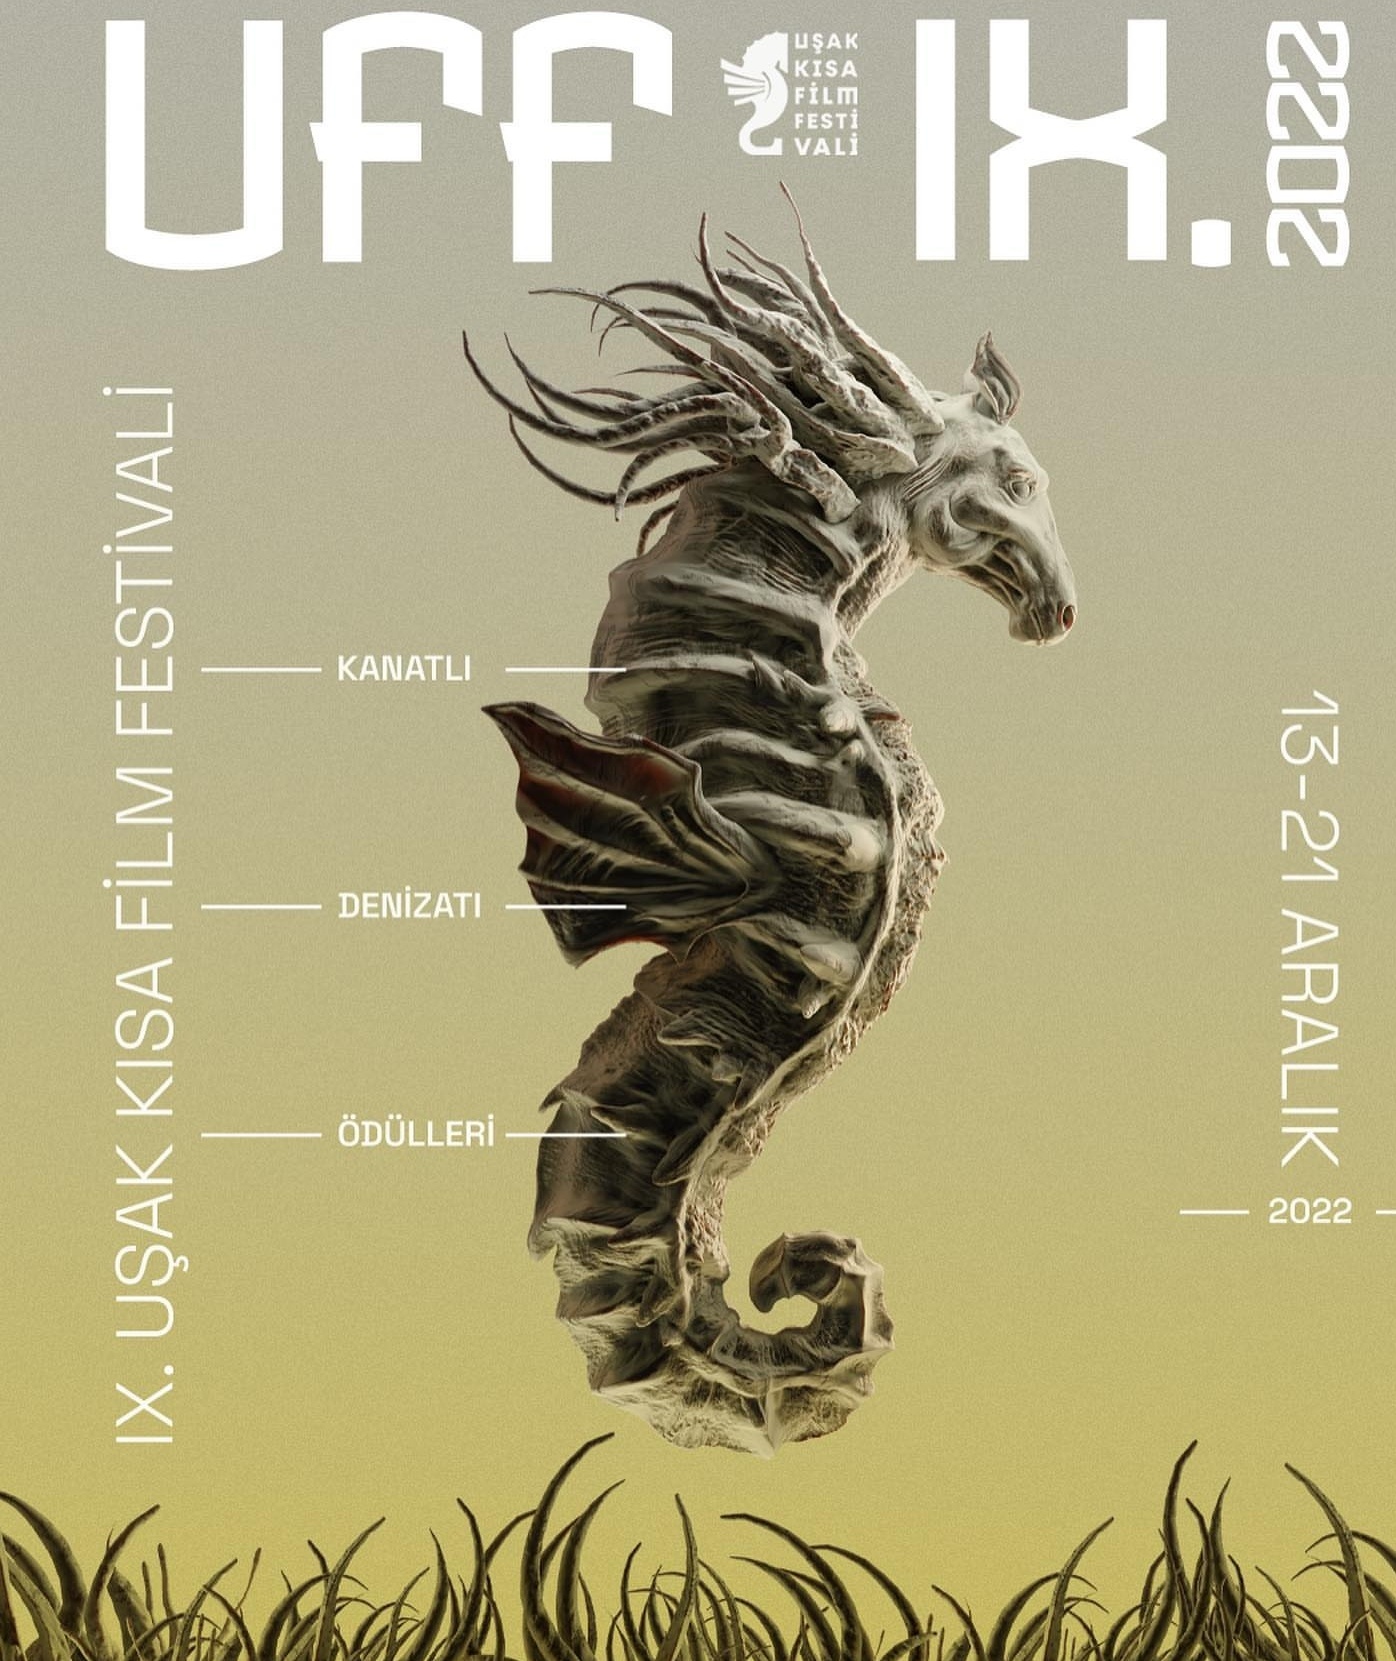 Usak Film Festivali